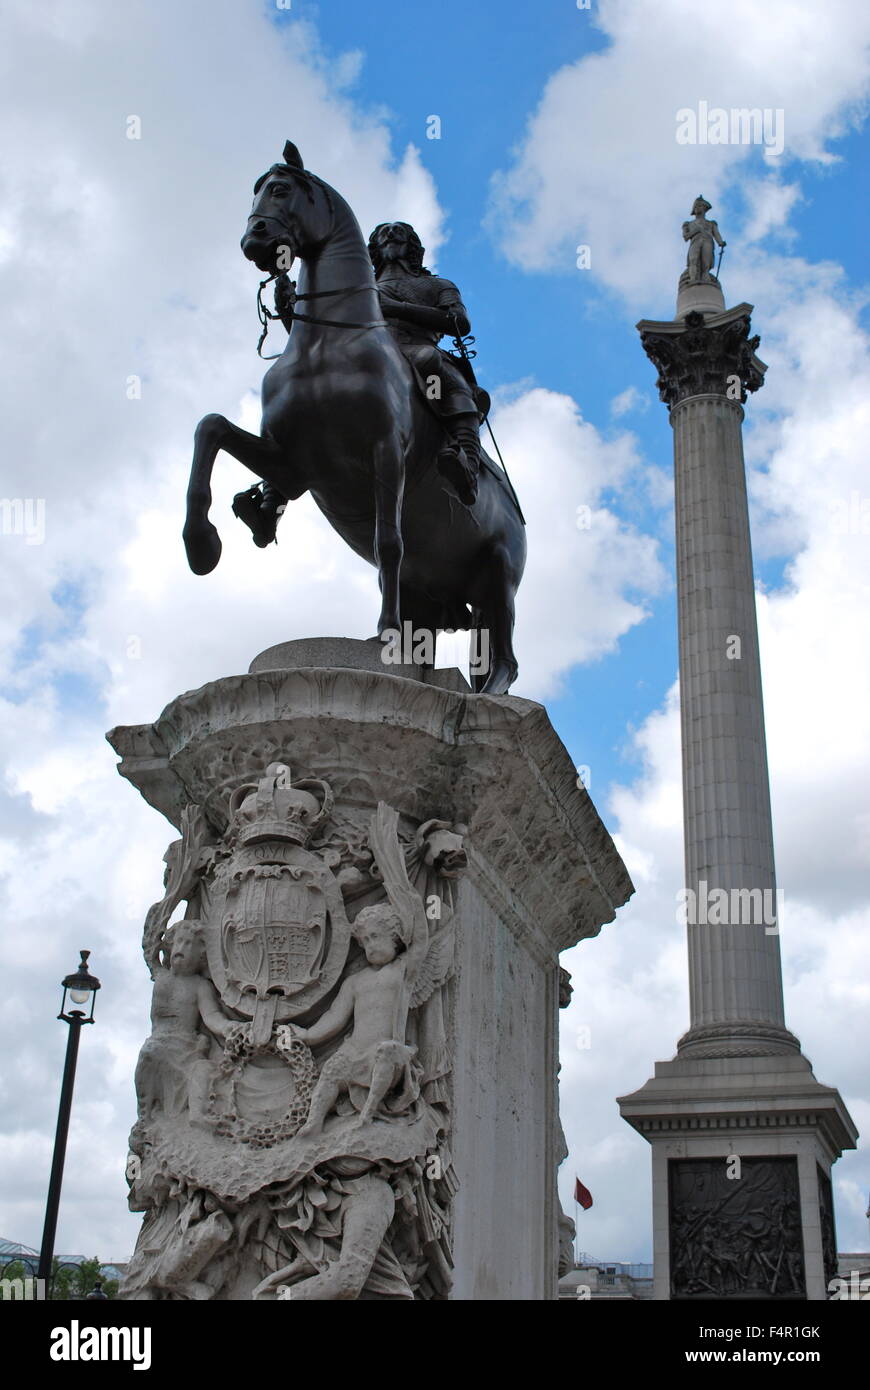 Statue of King Charles I on horseback in front of Nelson's Column in Trafalgar Square, London, England Stock Photo